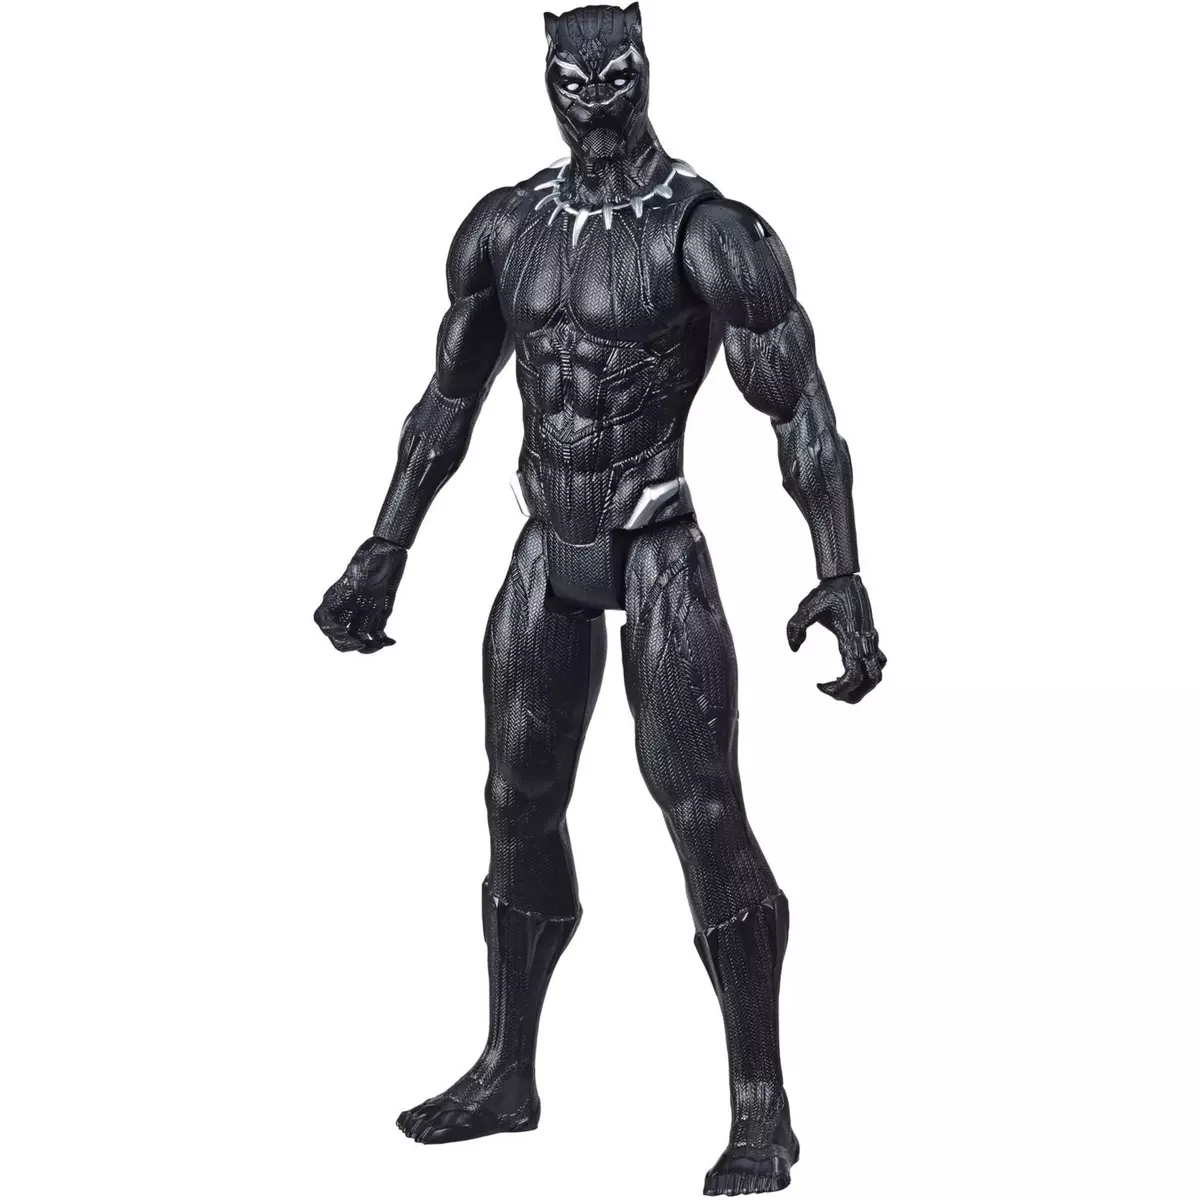 HASBRO Figurine Titan Avengers Endgame - Black Panther